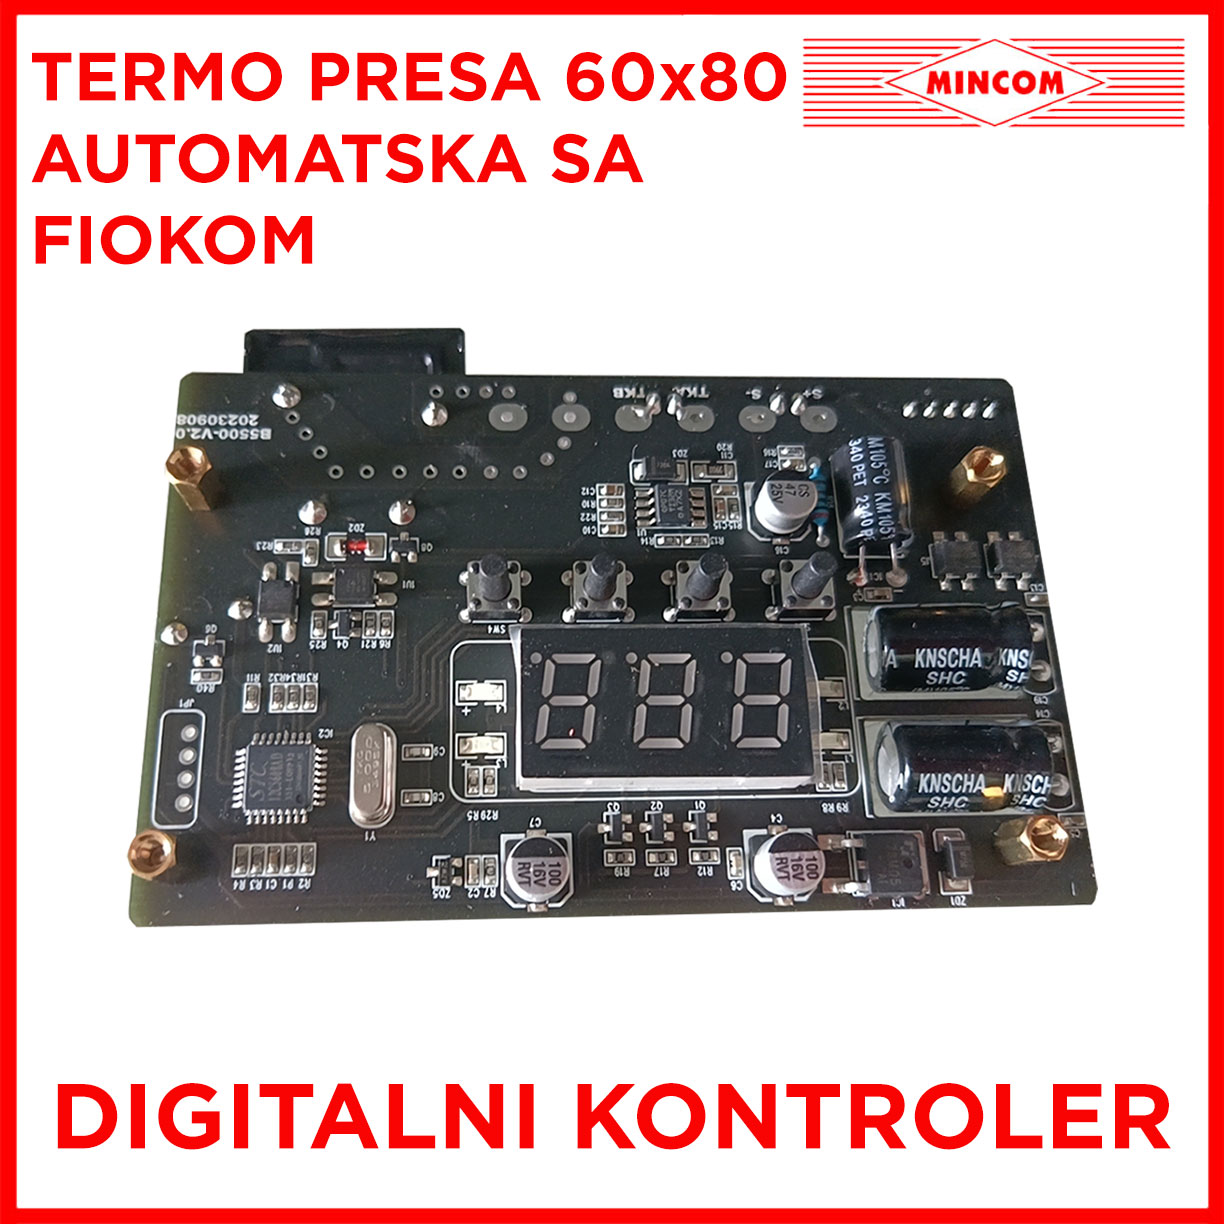 Digitalni-Kontroler-(Termo-Presa-60×80-Automatska-Sa-Fiokom)